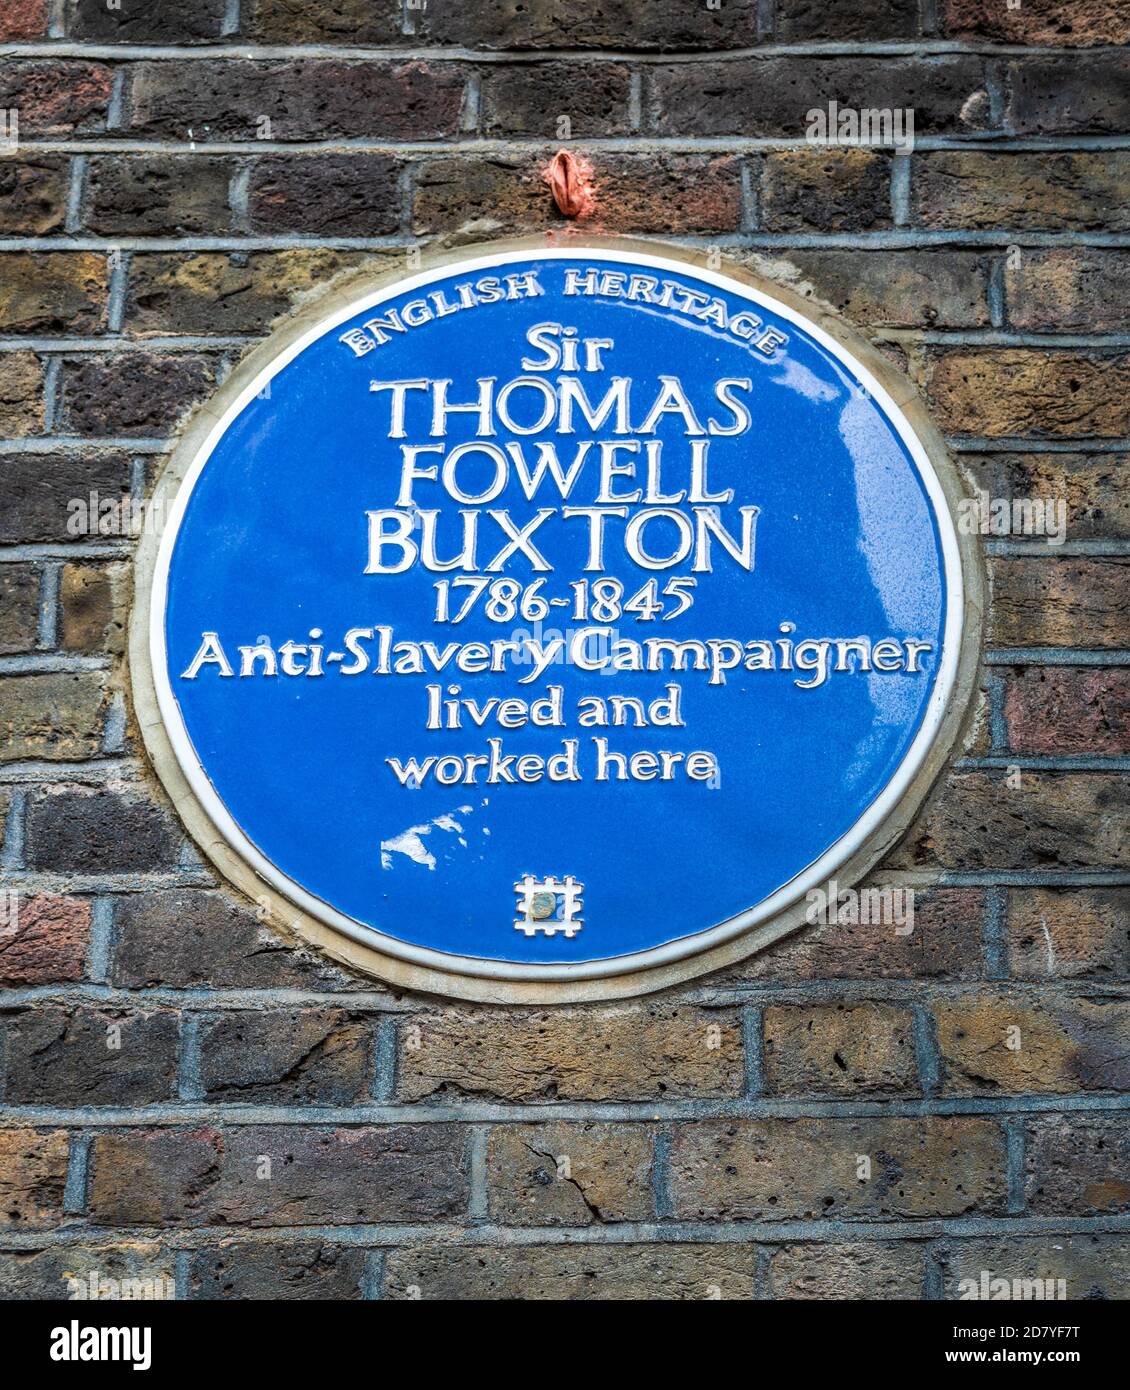 Sir Thomas Fowell Buxton Blue Plaque Brick Lane East London. Sir Thomas Fowell Buxton 1786-1845 Anti-Slavery Campaigner lebte und arbeitete hier. Stockfoto